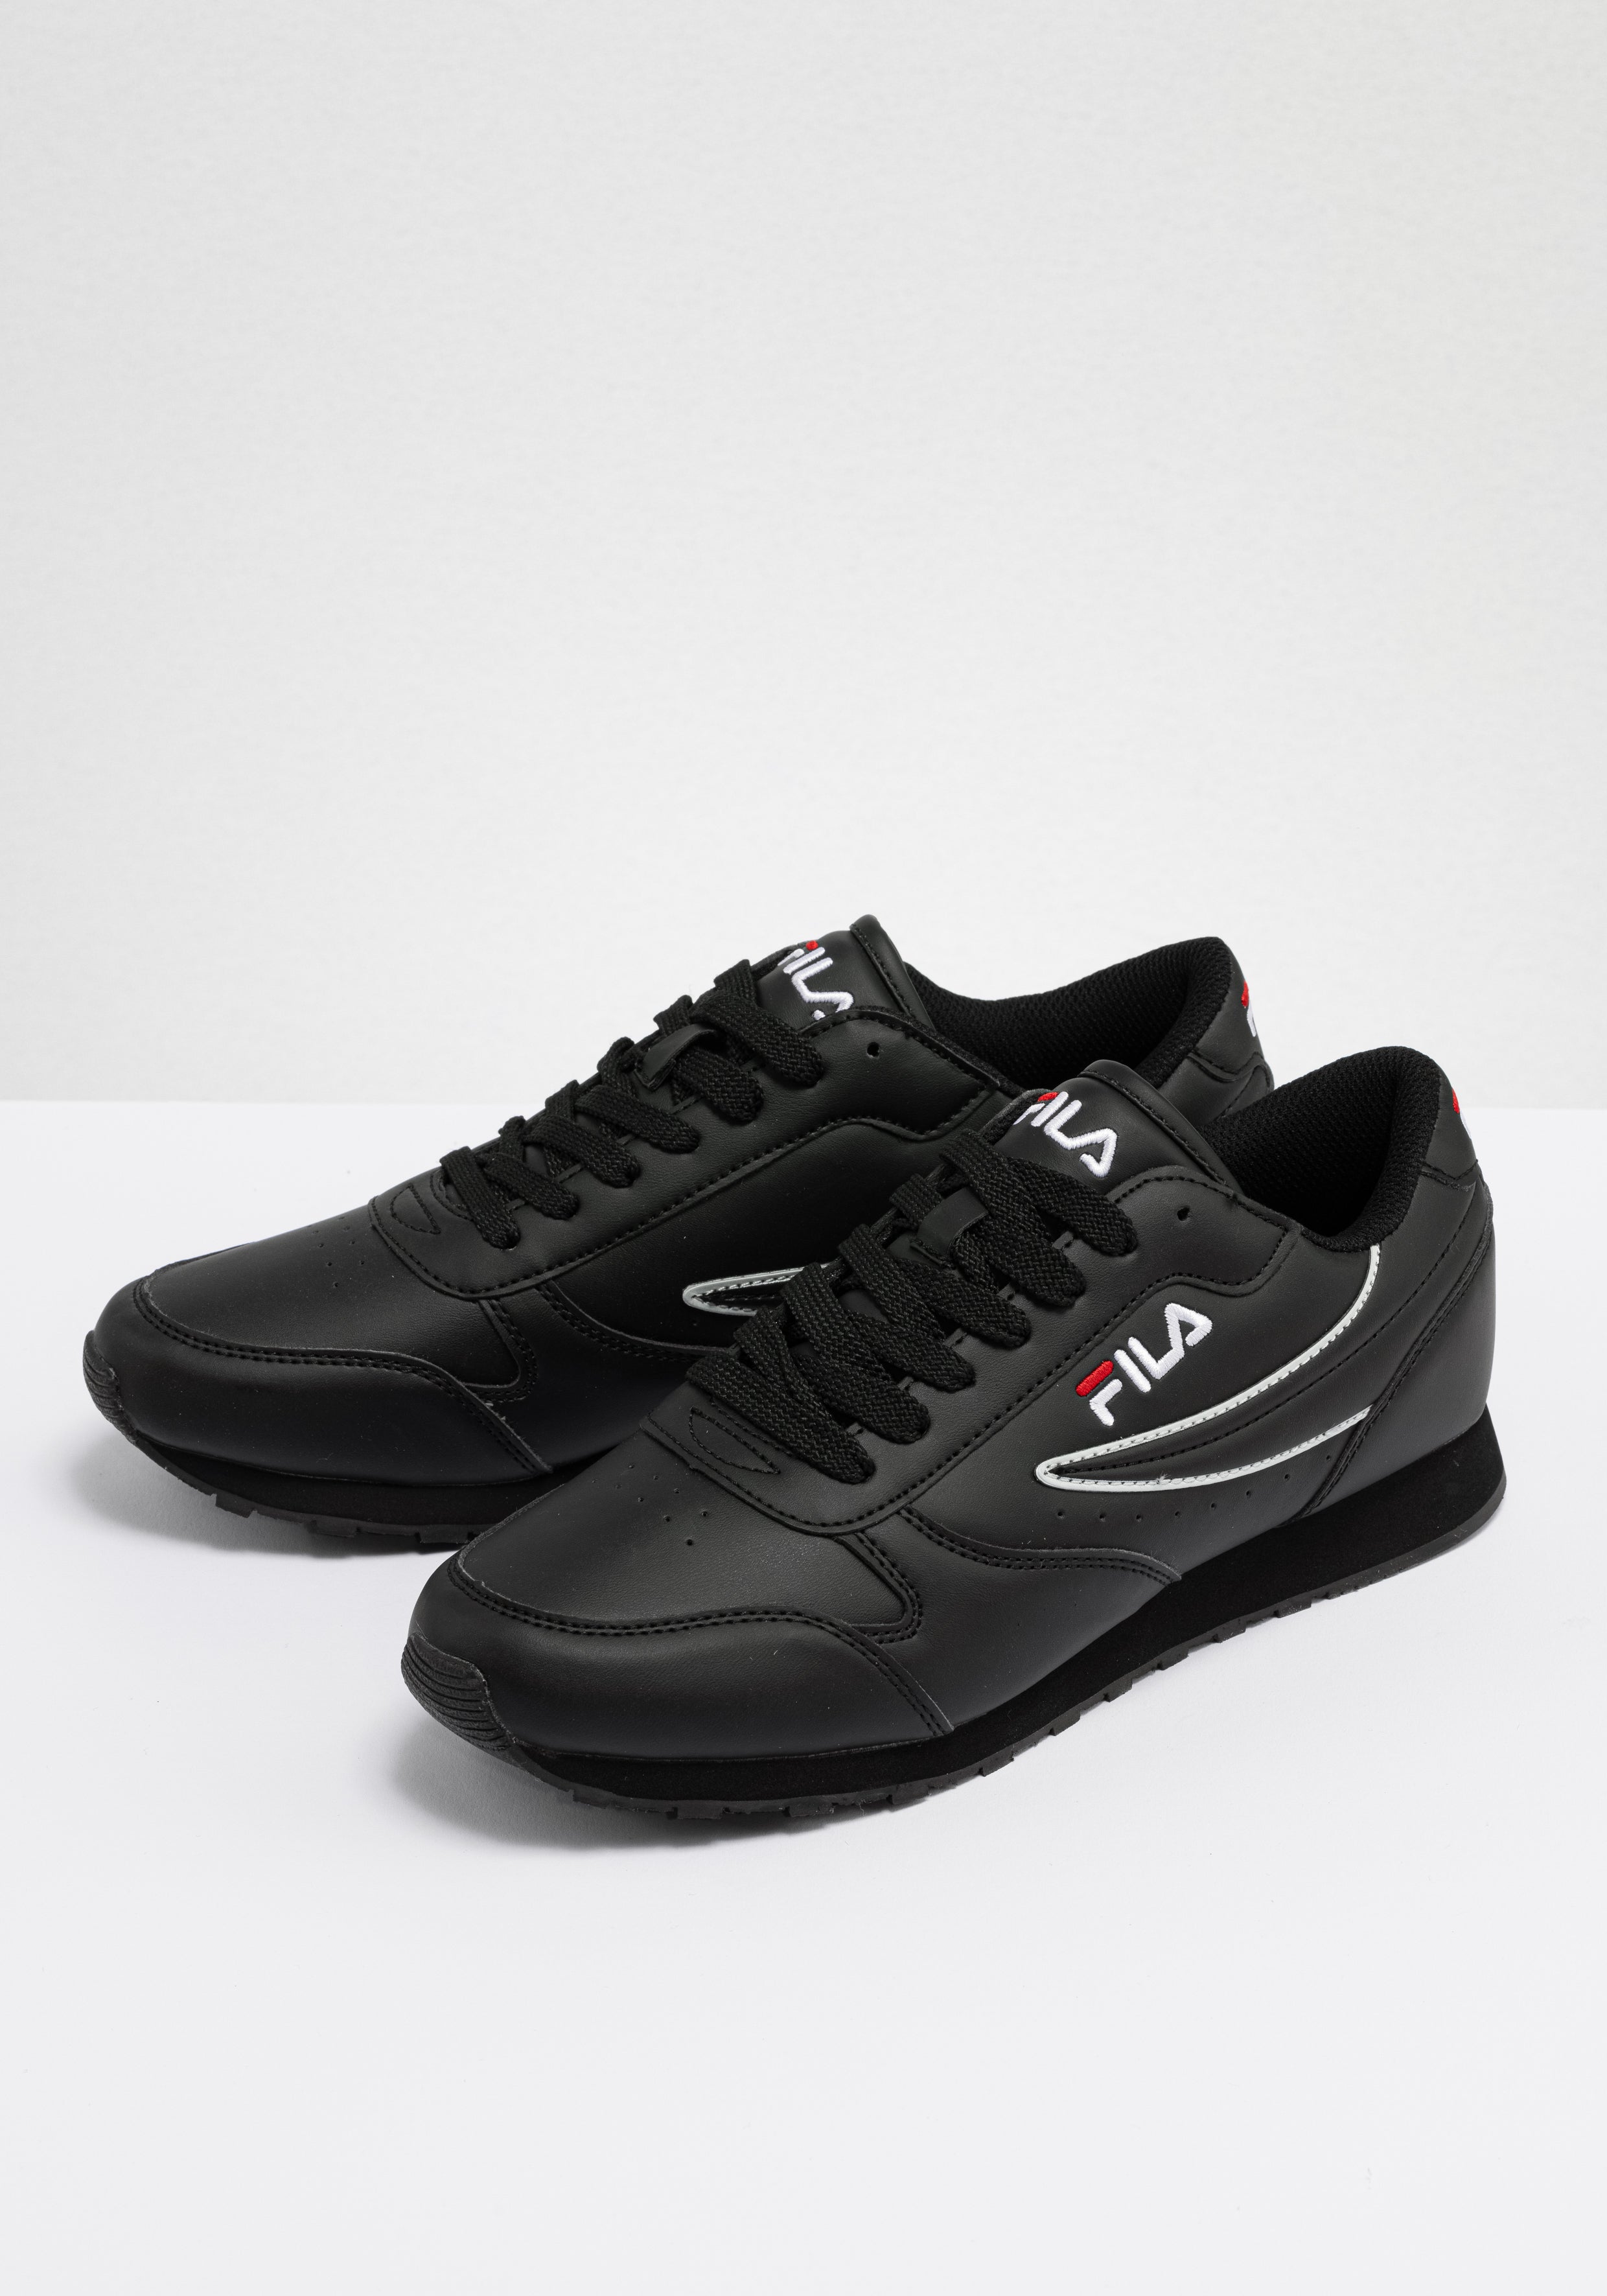 Orbit in Black-Black Sneakers Fila   